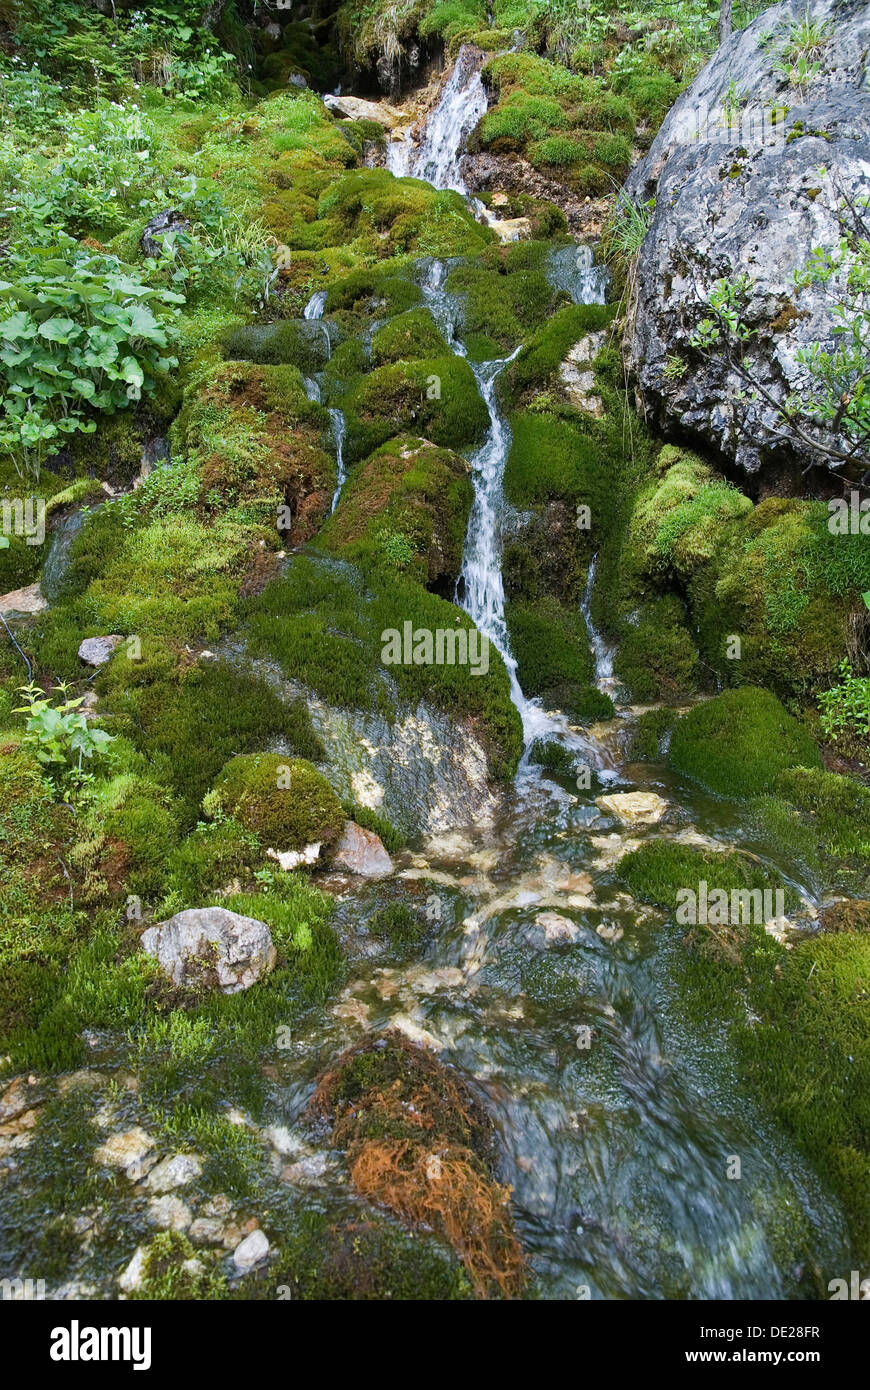 Small moss-covered tributary of the Johannesfluss River in Johannestal Valley, in the Karwendel Range, Tyrol, Austria, Europe Stock Photo